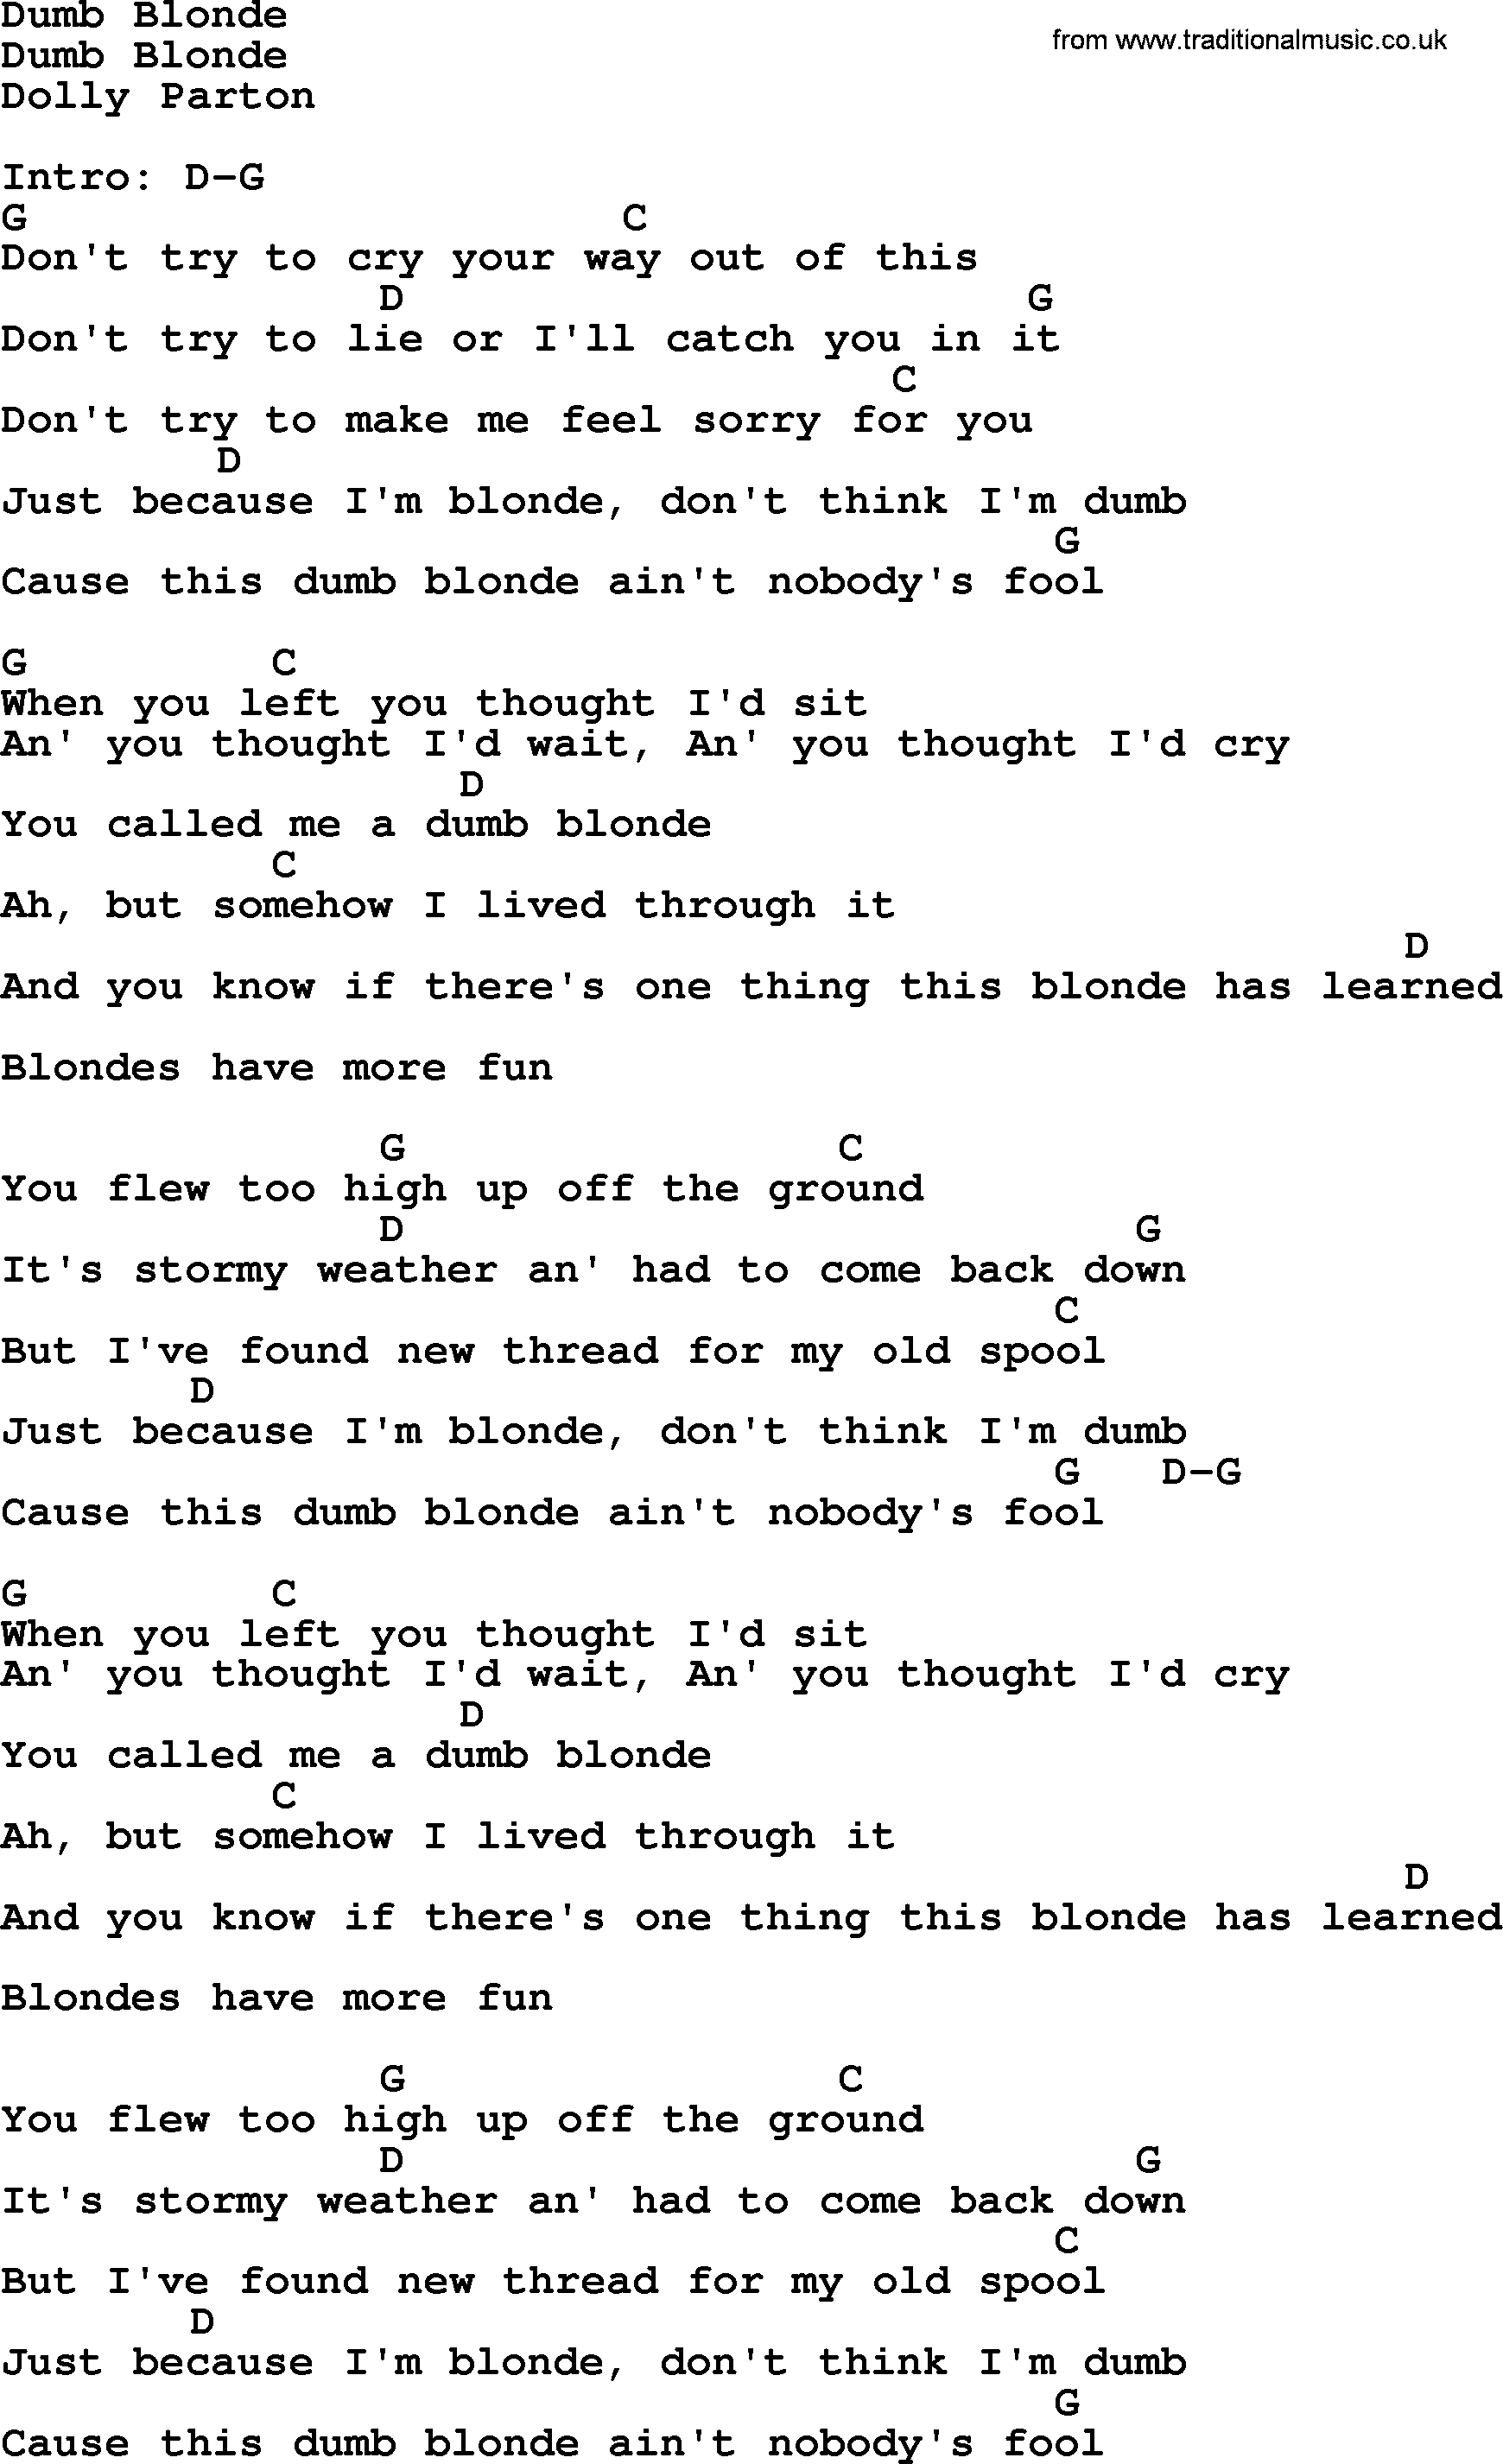 Bluegrass song: Dumb Blonde, lyrics and chords